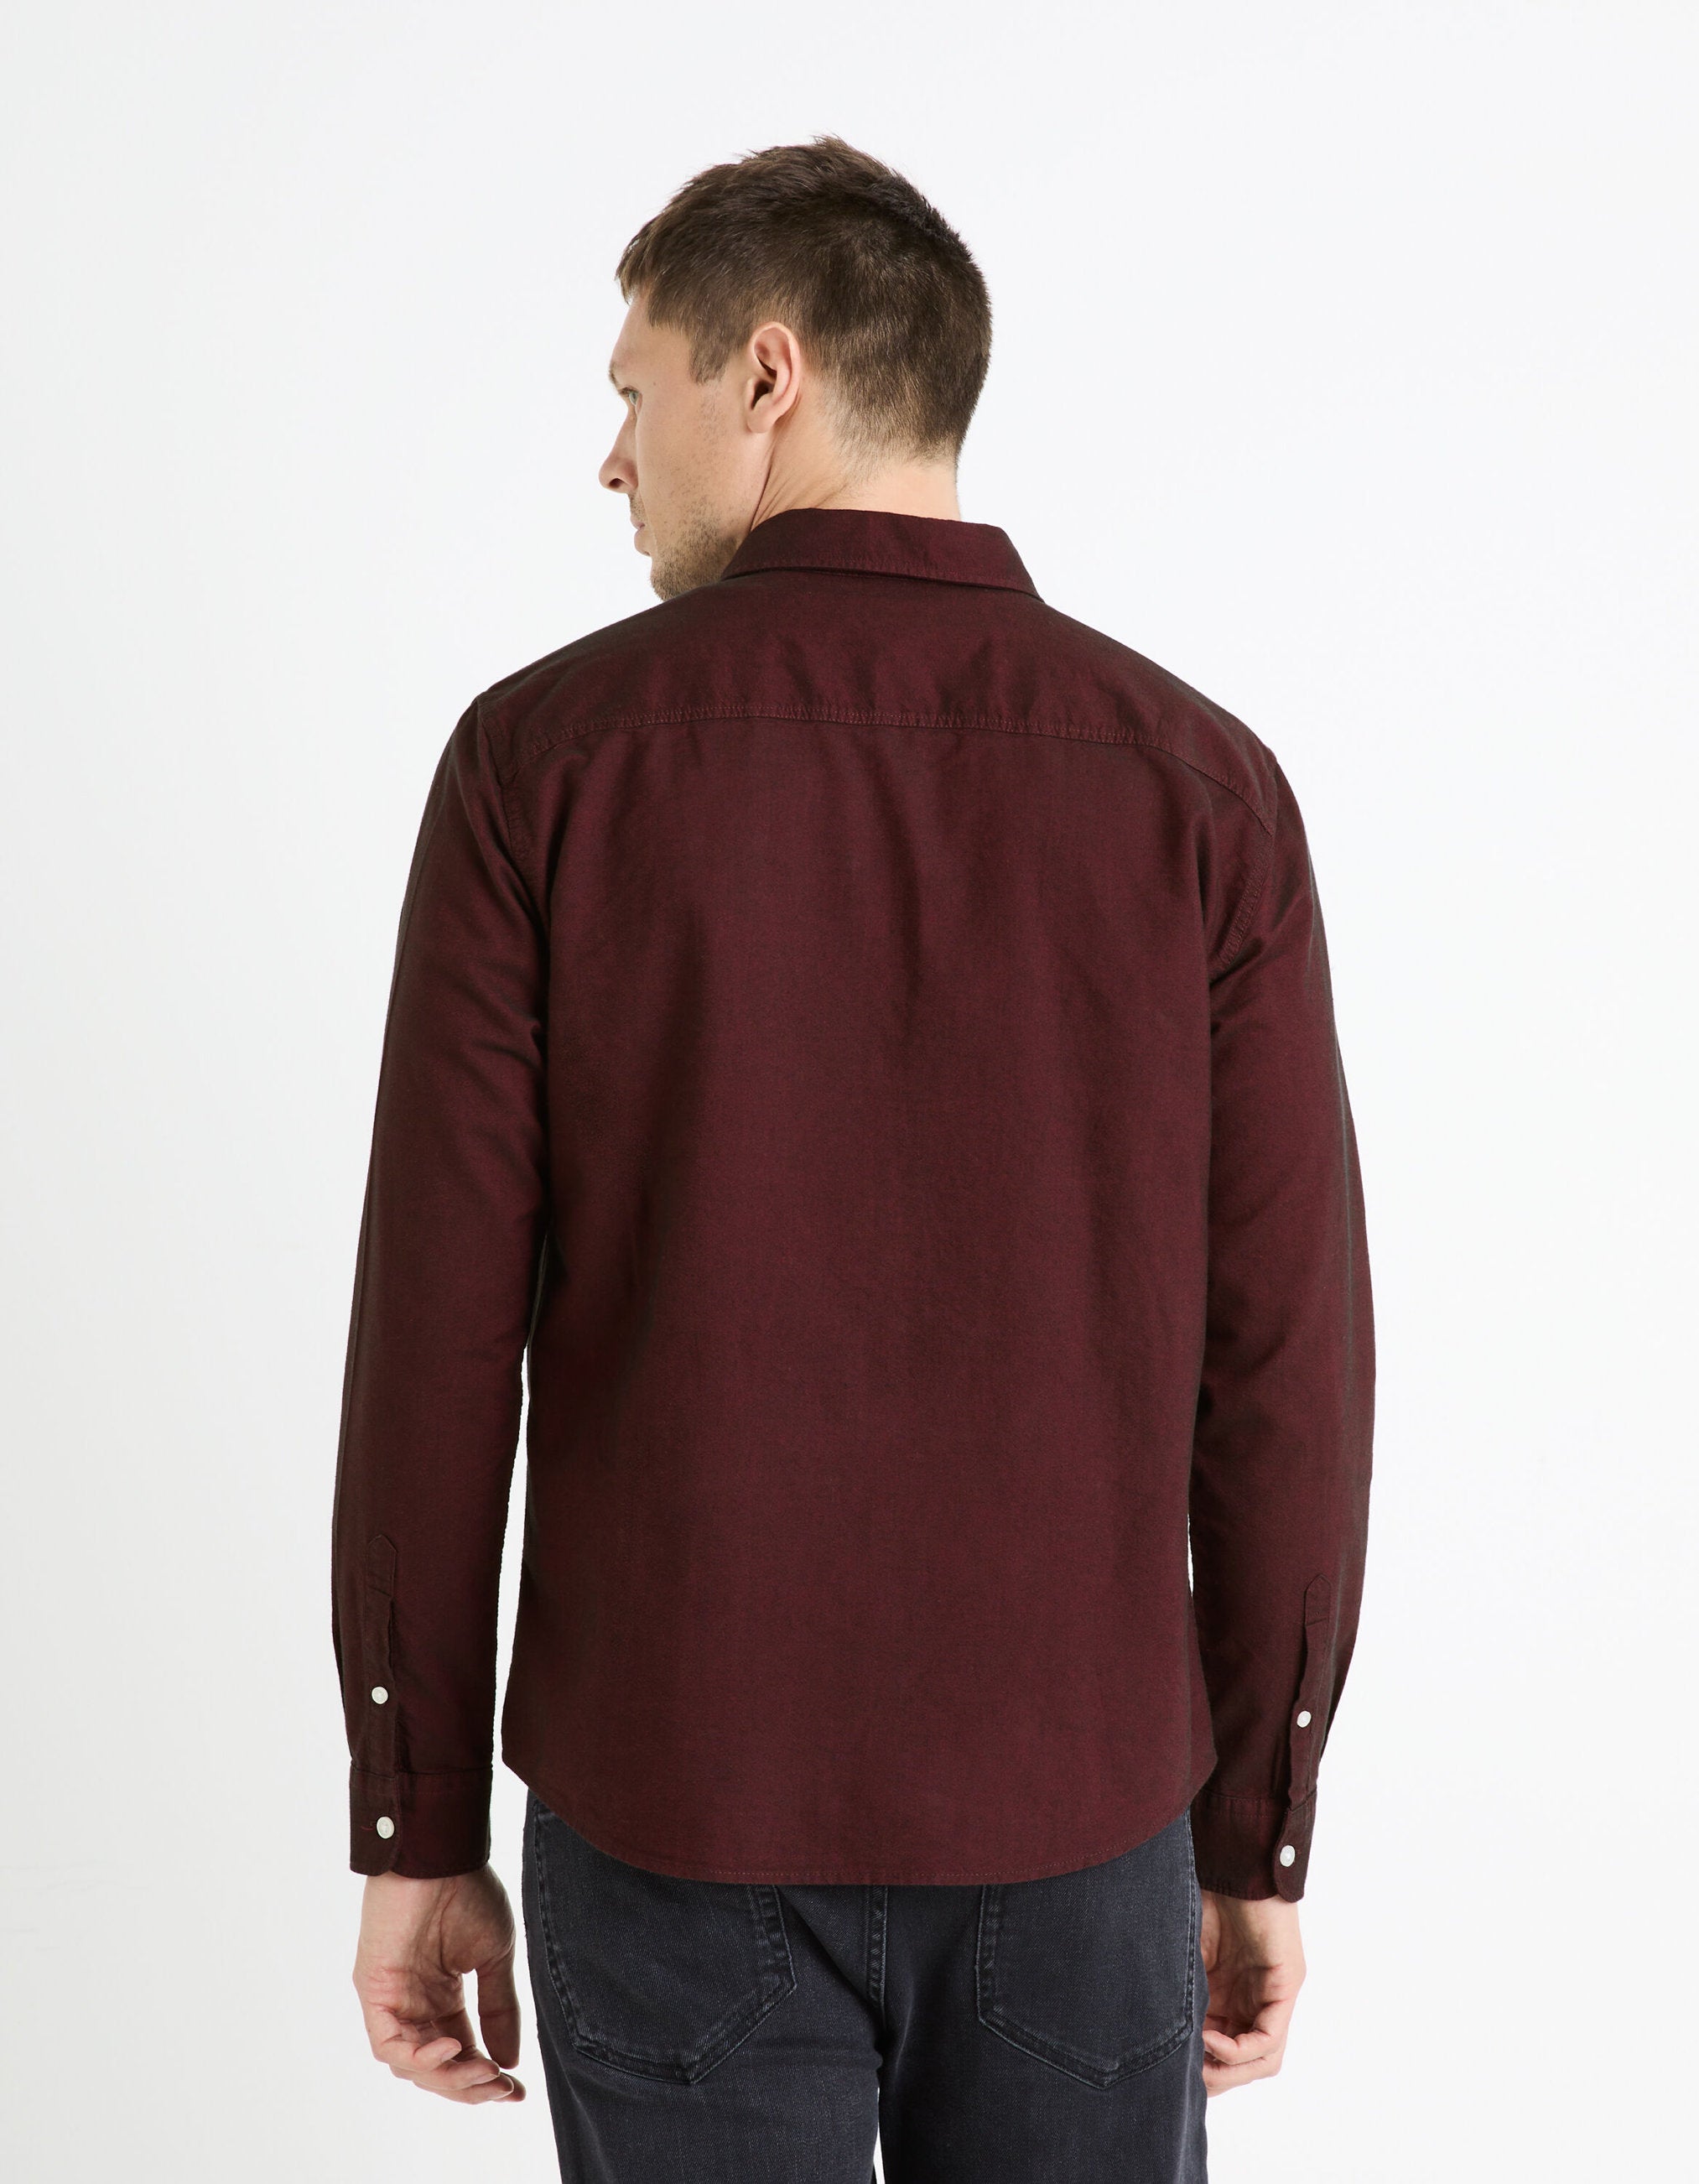 Regular Shirt 100% Oxford Cotton - Burgundy_DAXFORD_BORDEAUX_04